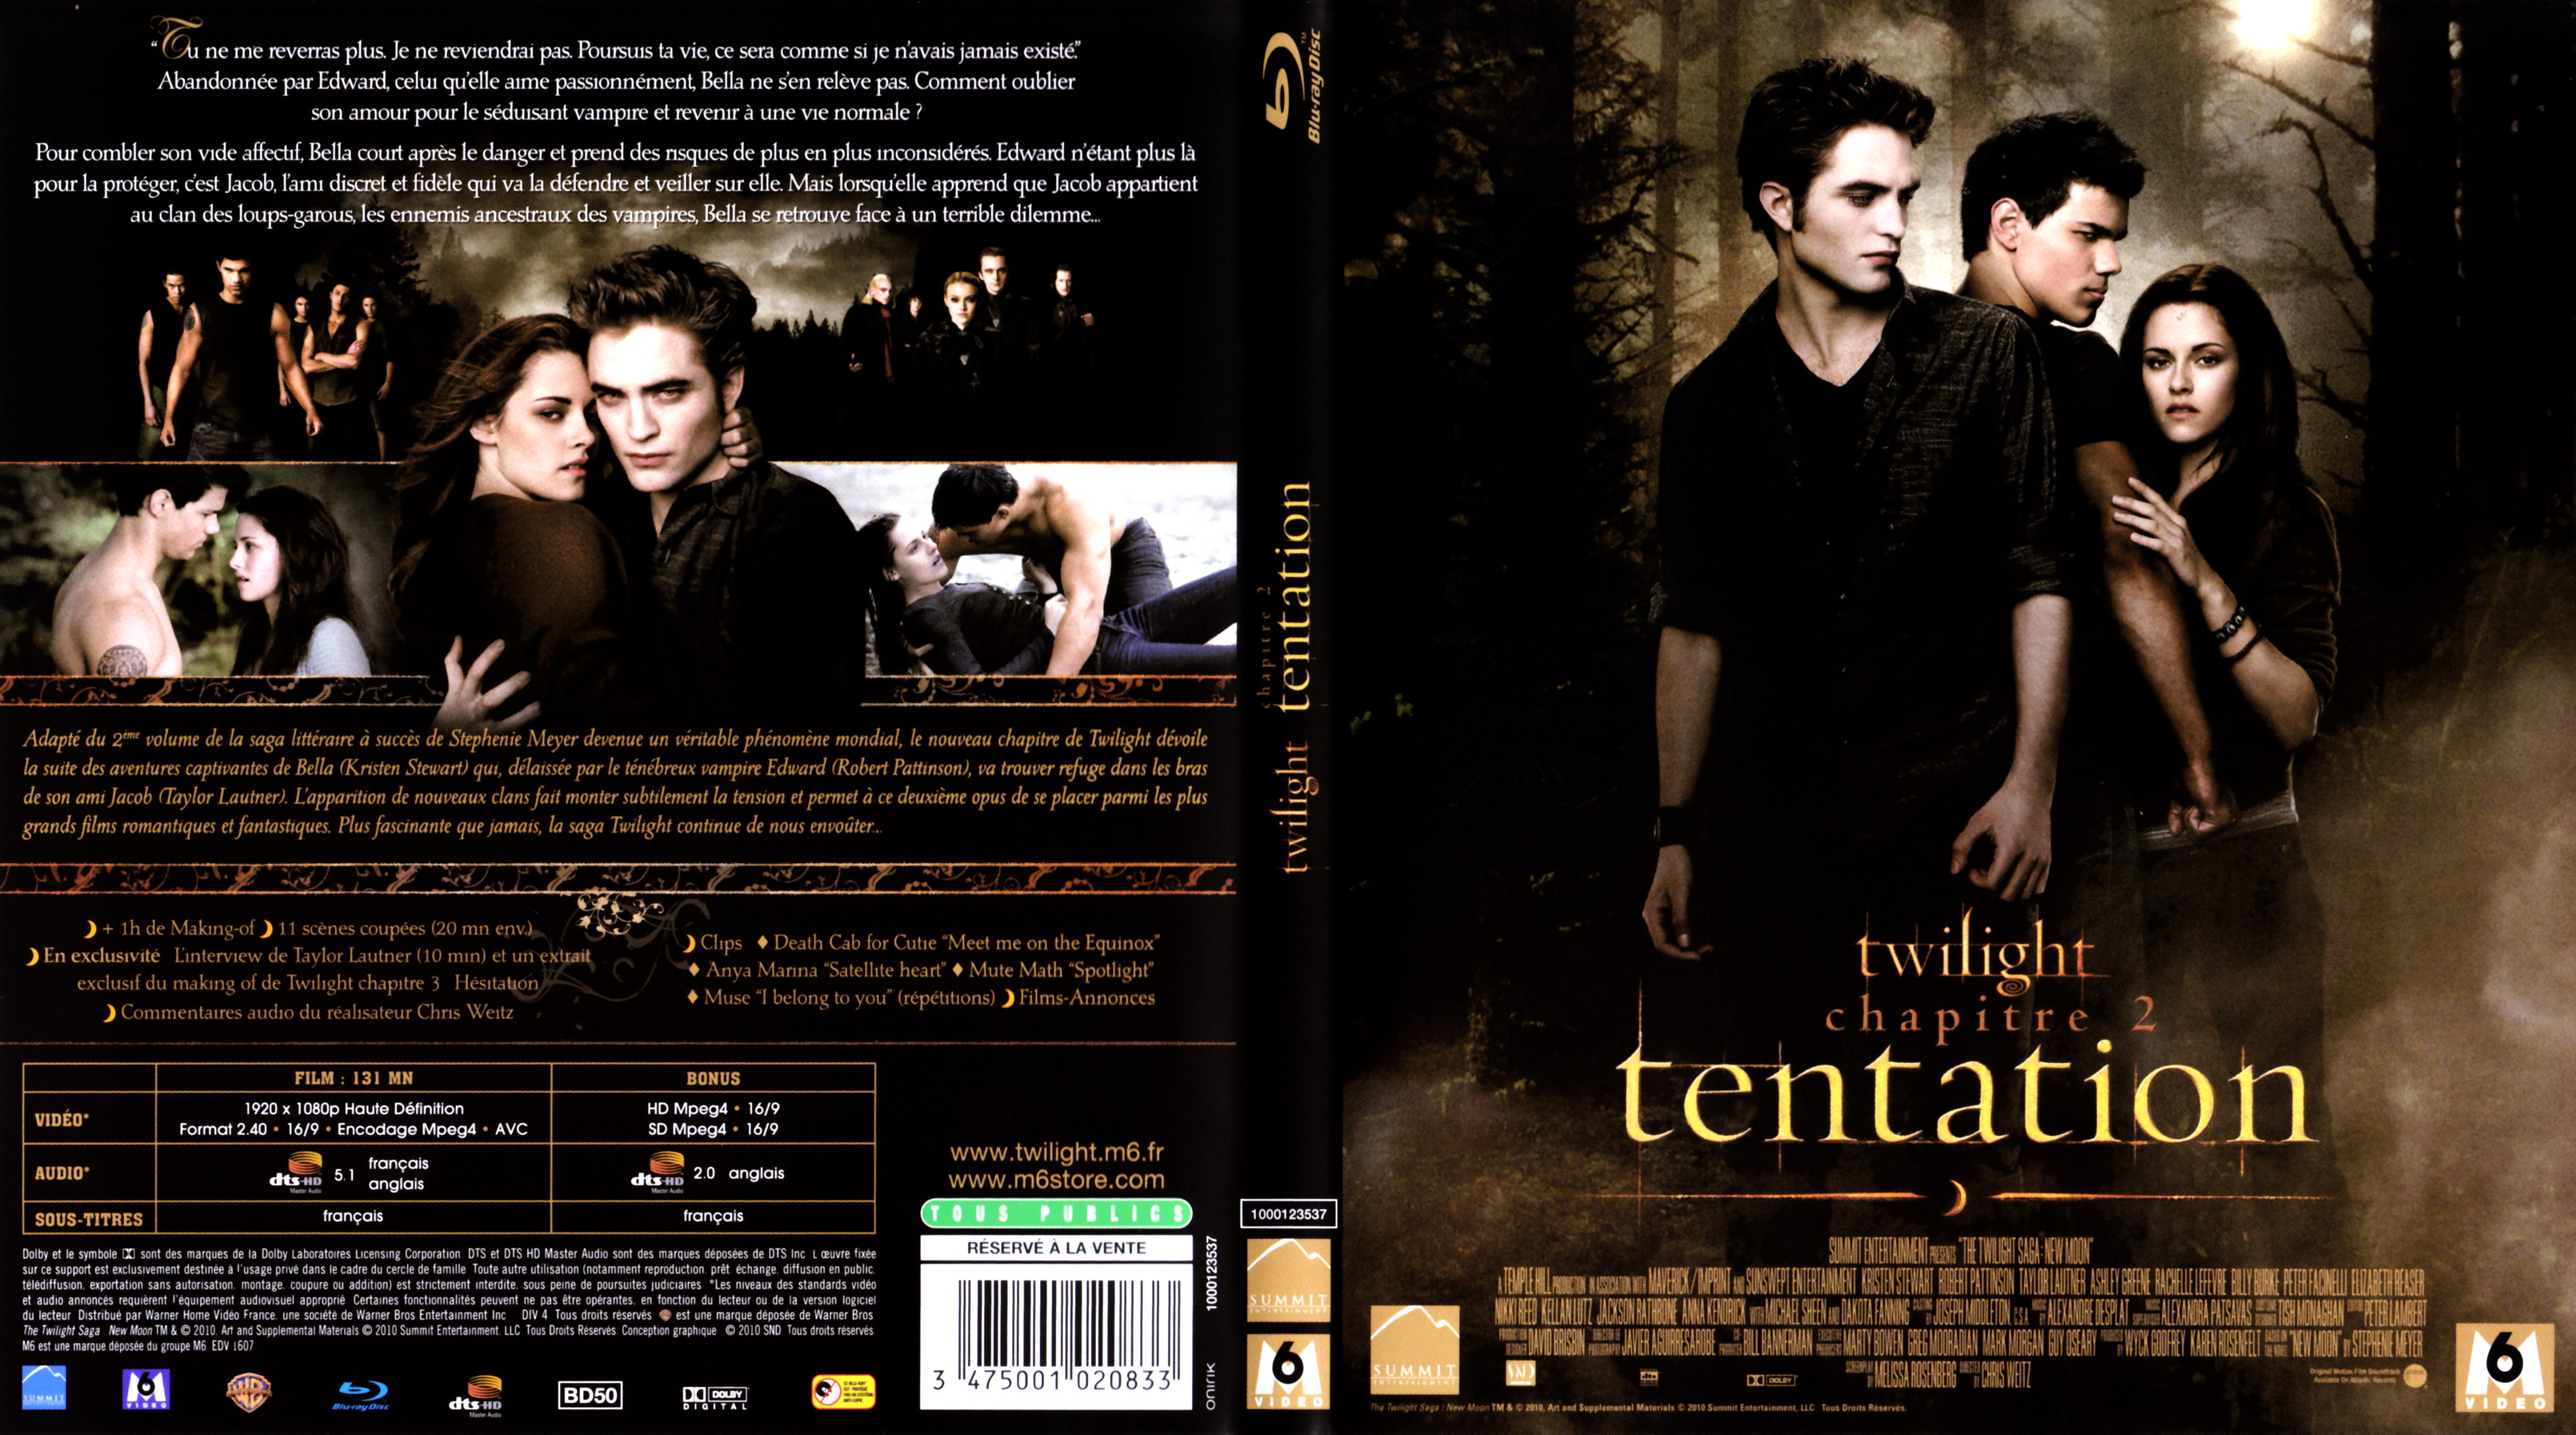 Jaquette DVD Twilight Chapitre 2 - Tentation (BLU-RAY)